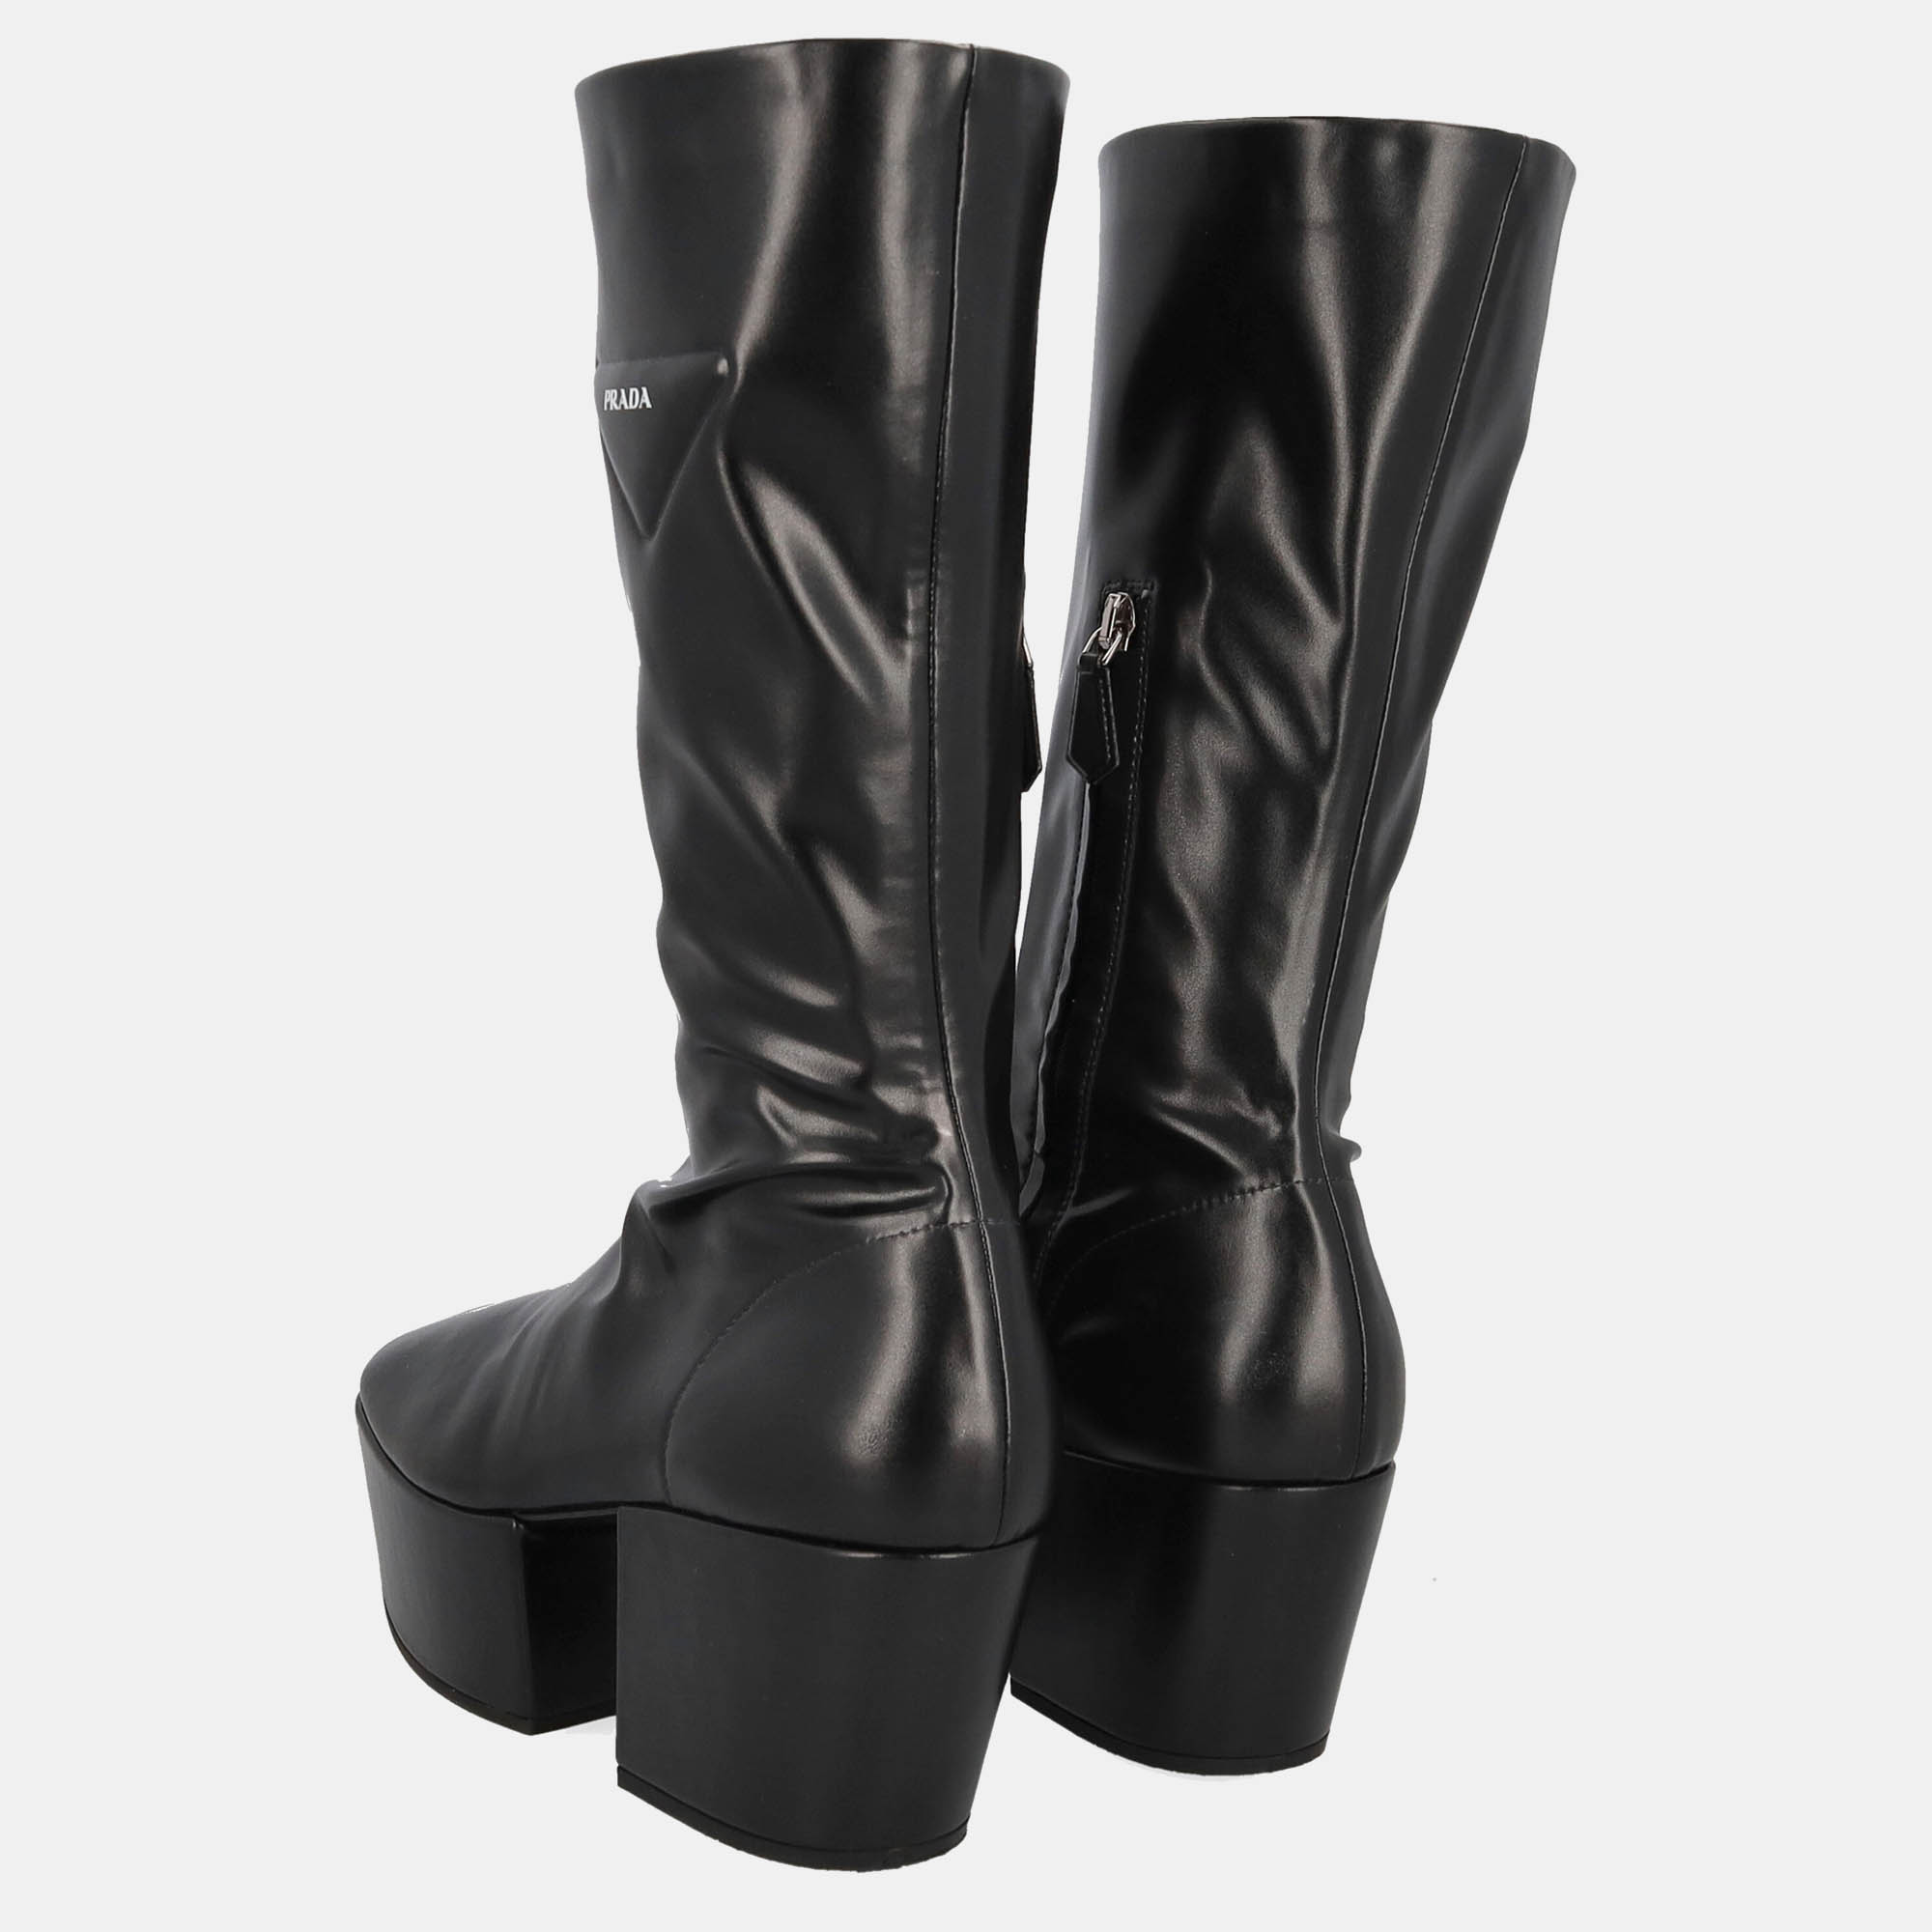 Prada  Women's Leather Ankle Boots - Black - EU 39